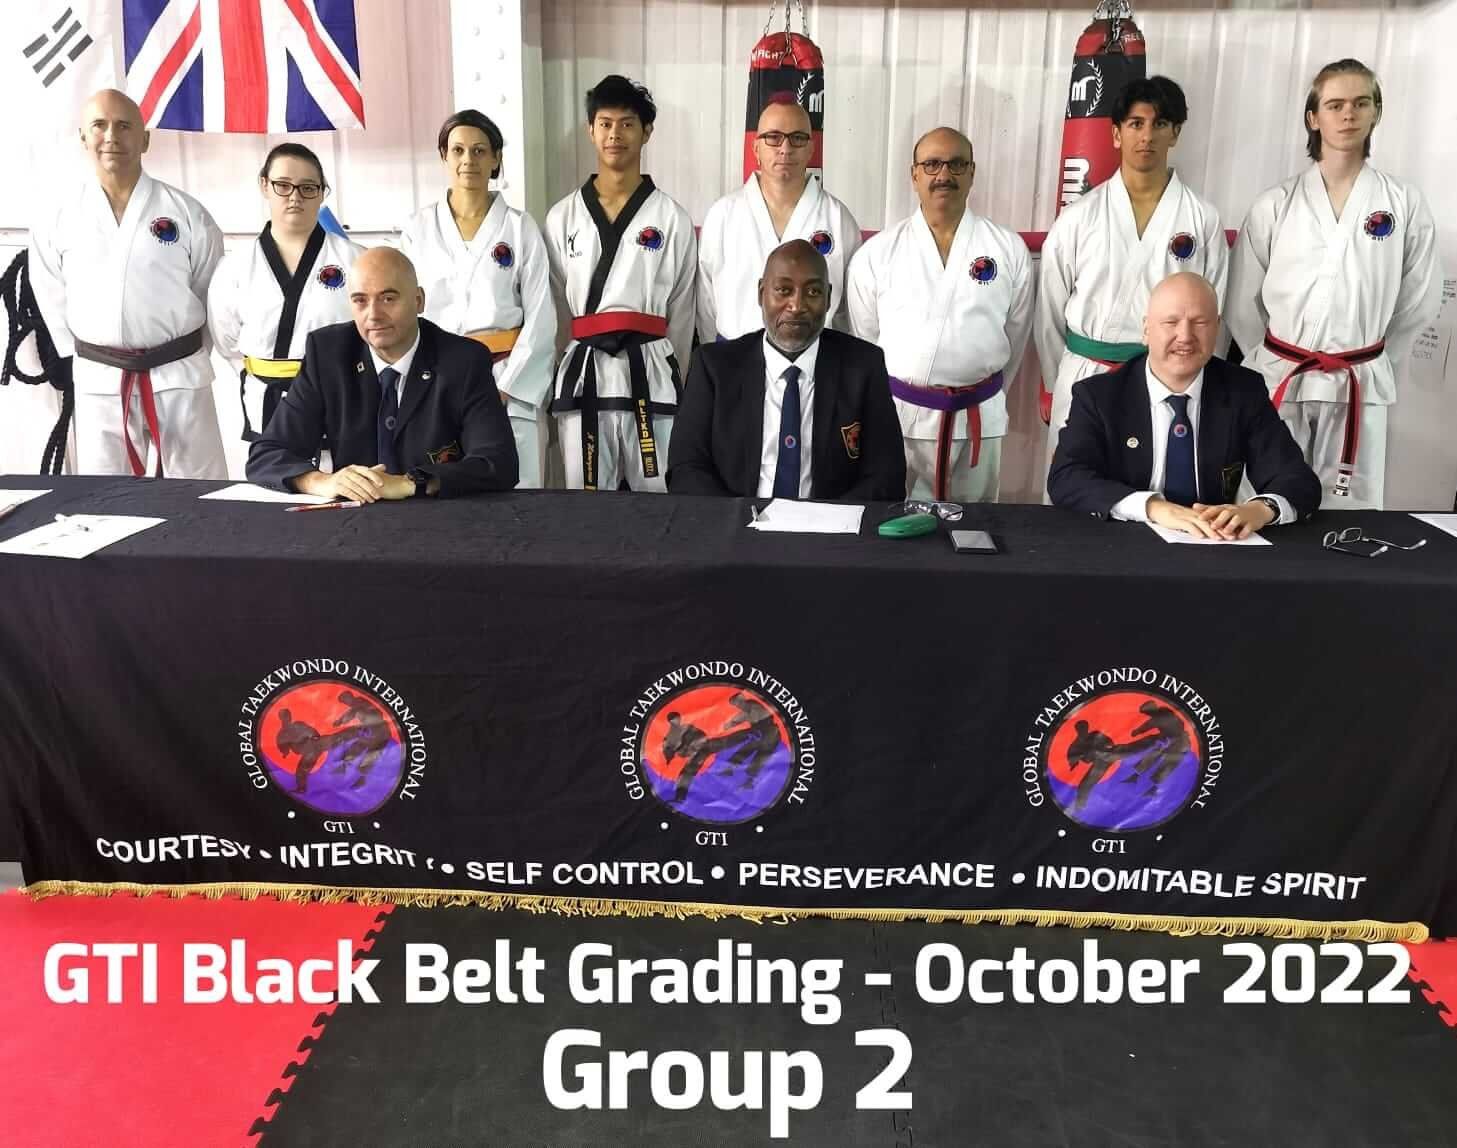 Black belt grading 9th Oct. 2022 Group 2